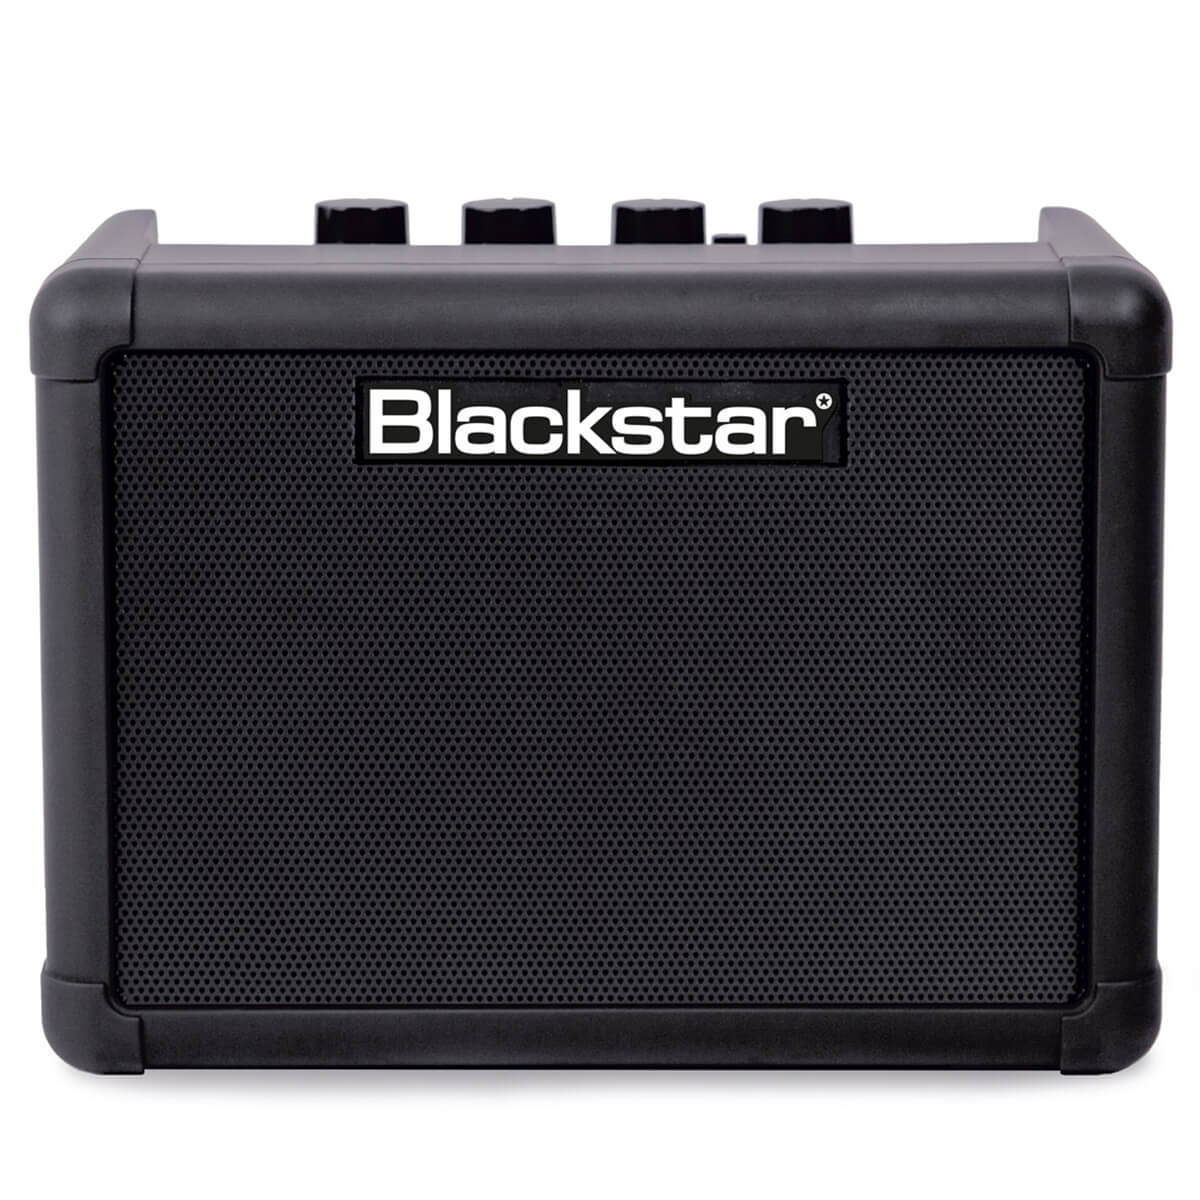 FLY 3 Bluetooth - Blackstar